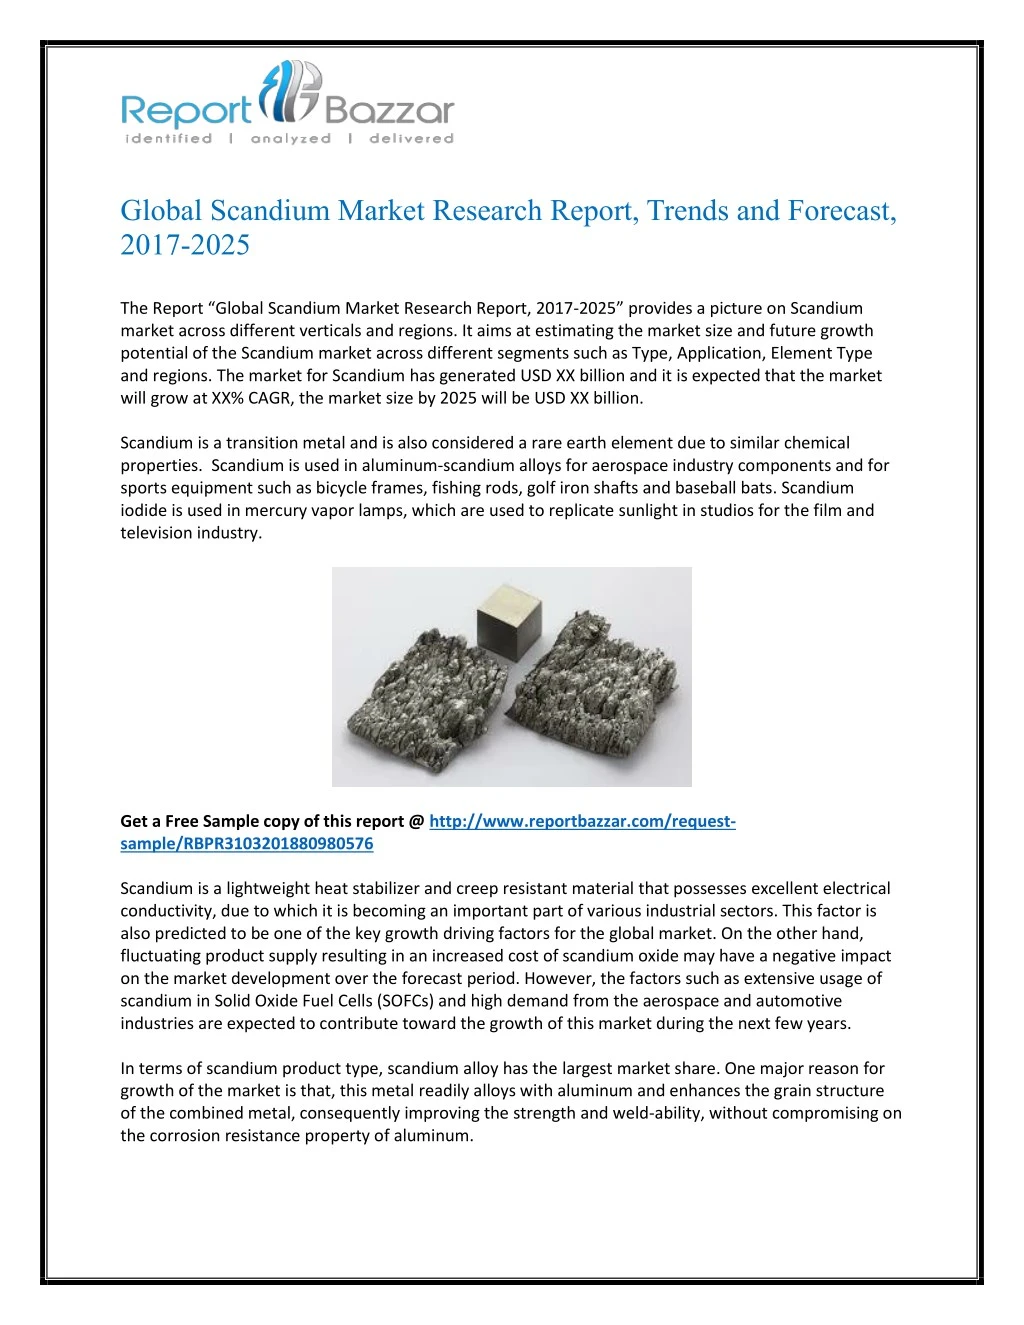 global scandium market research report trends